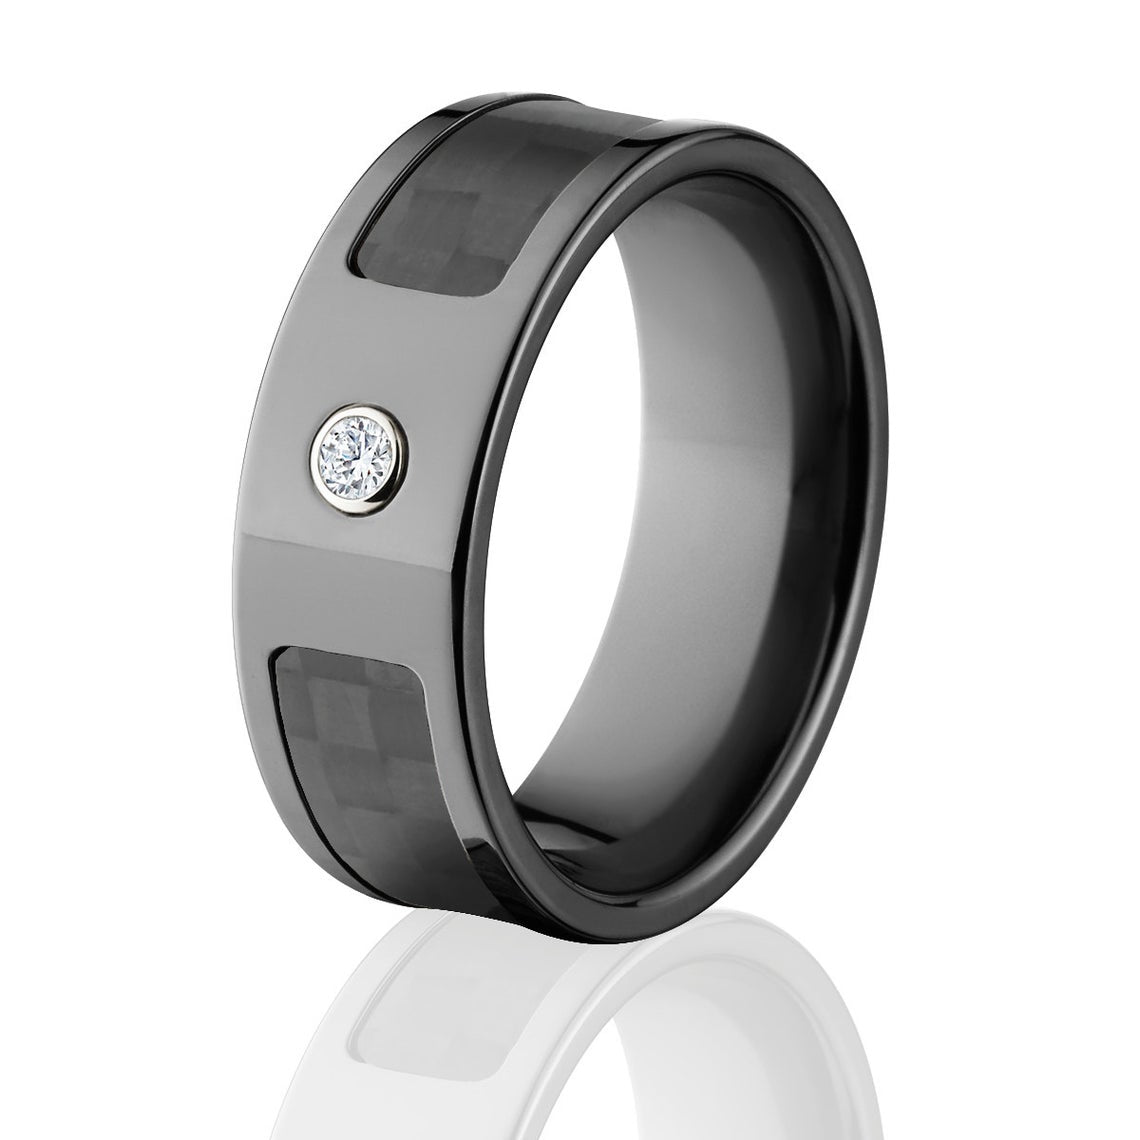 8mm wide black zirconium ring with black carbon fiber inlay and a bezel set diamond